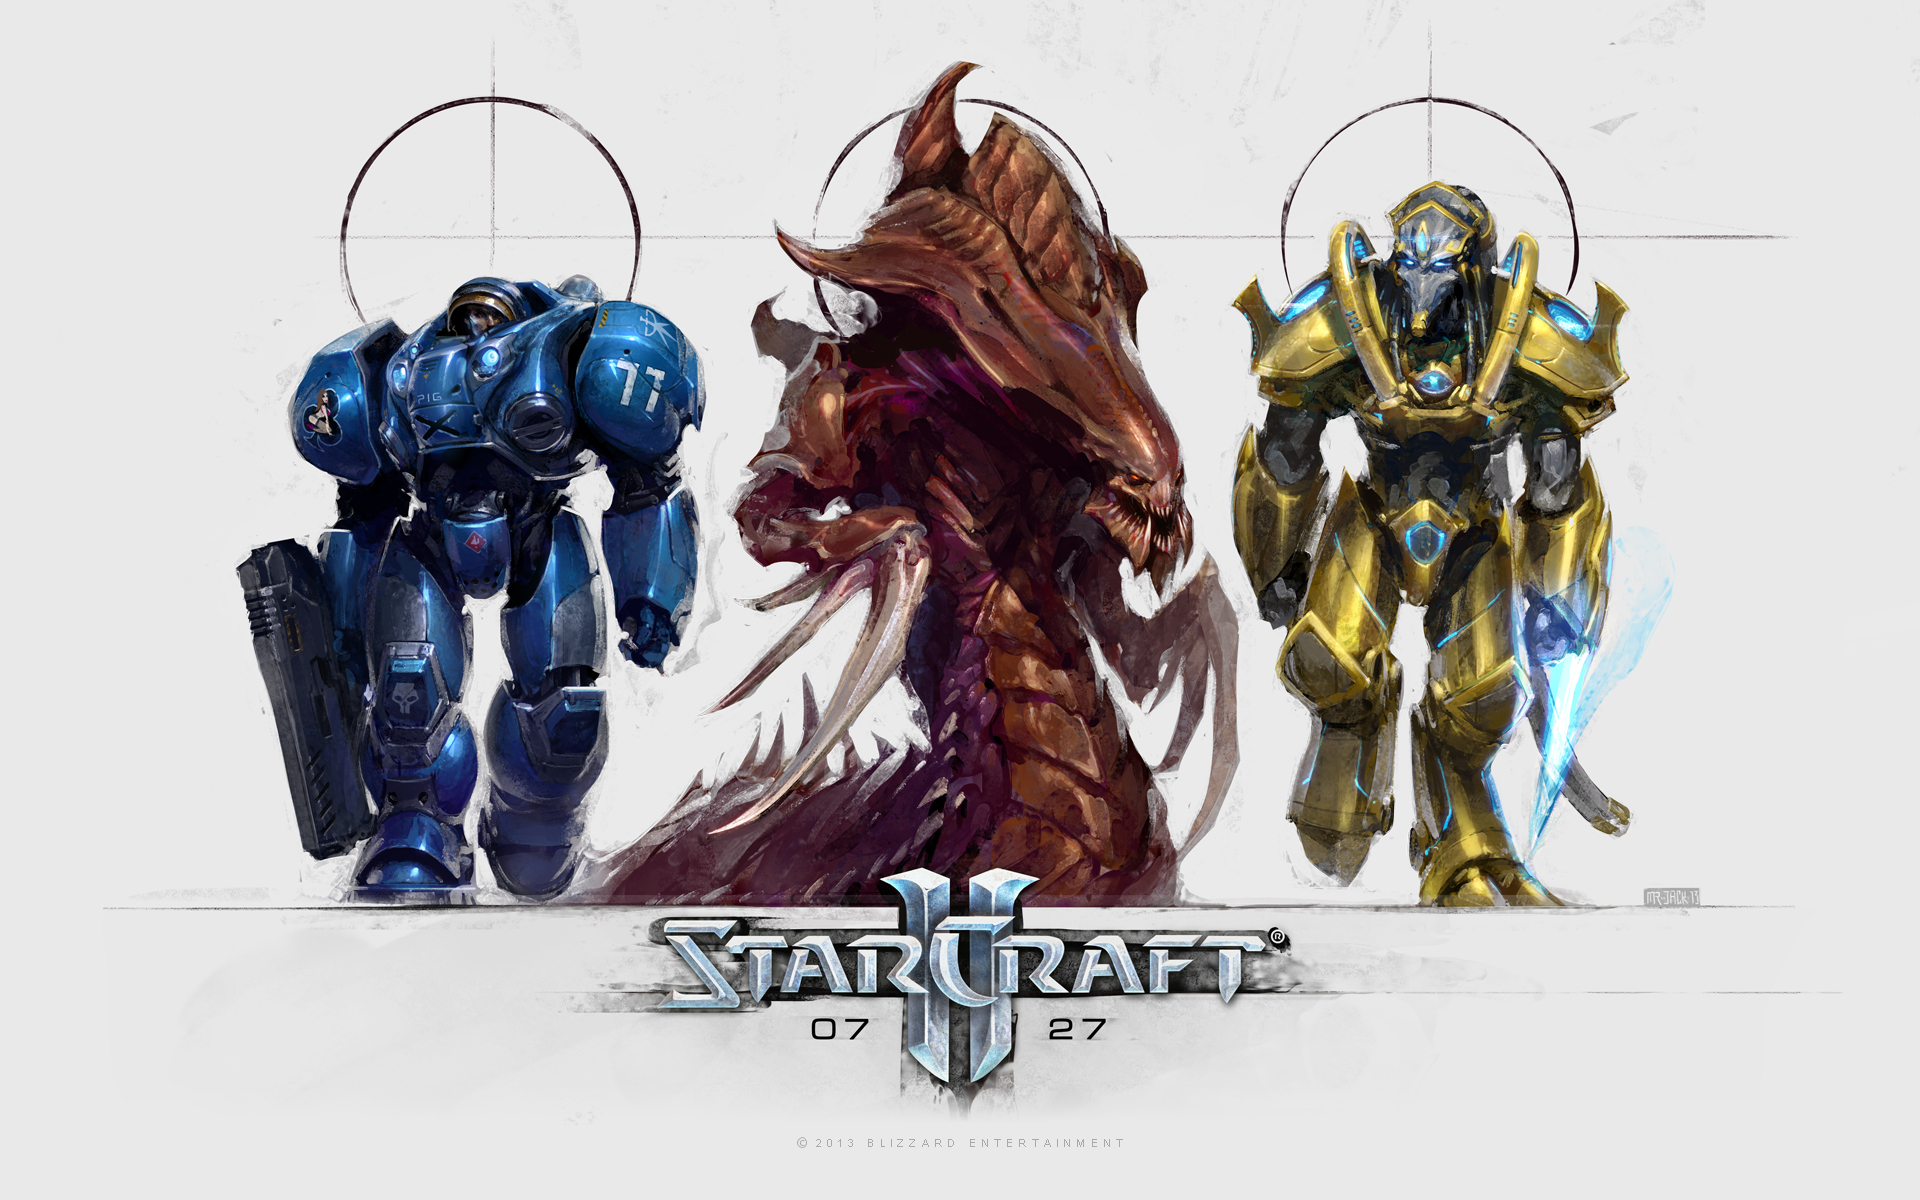 Starcraft Ii StarCraft Ii Heart Of The Swarm Zerg Protoss Video Games Video Game Art Video Game Char 1920x1200